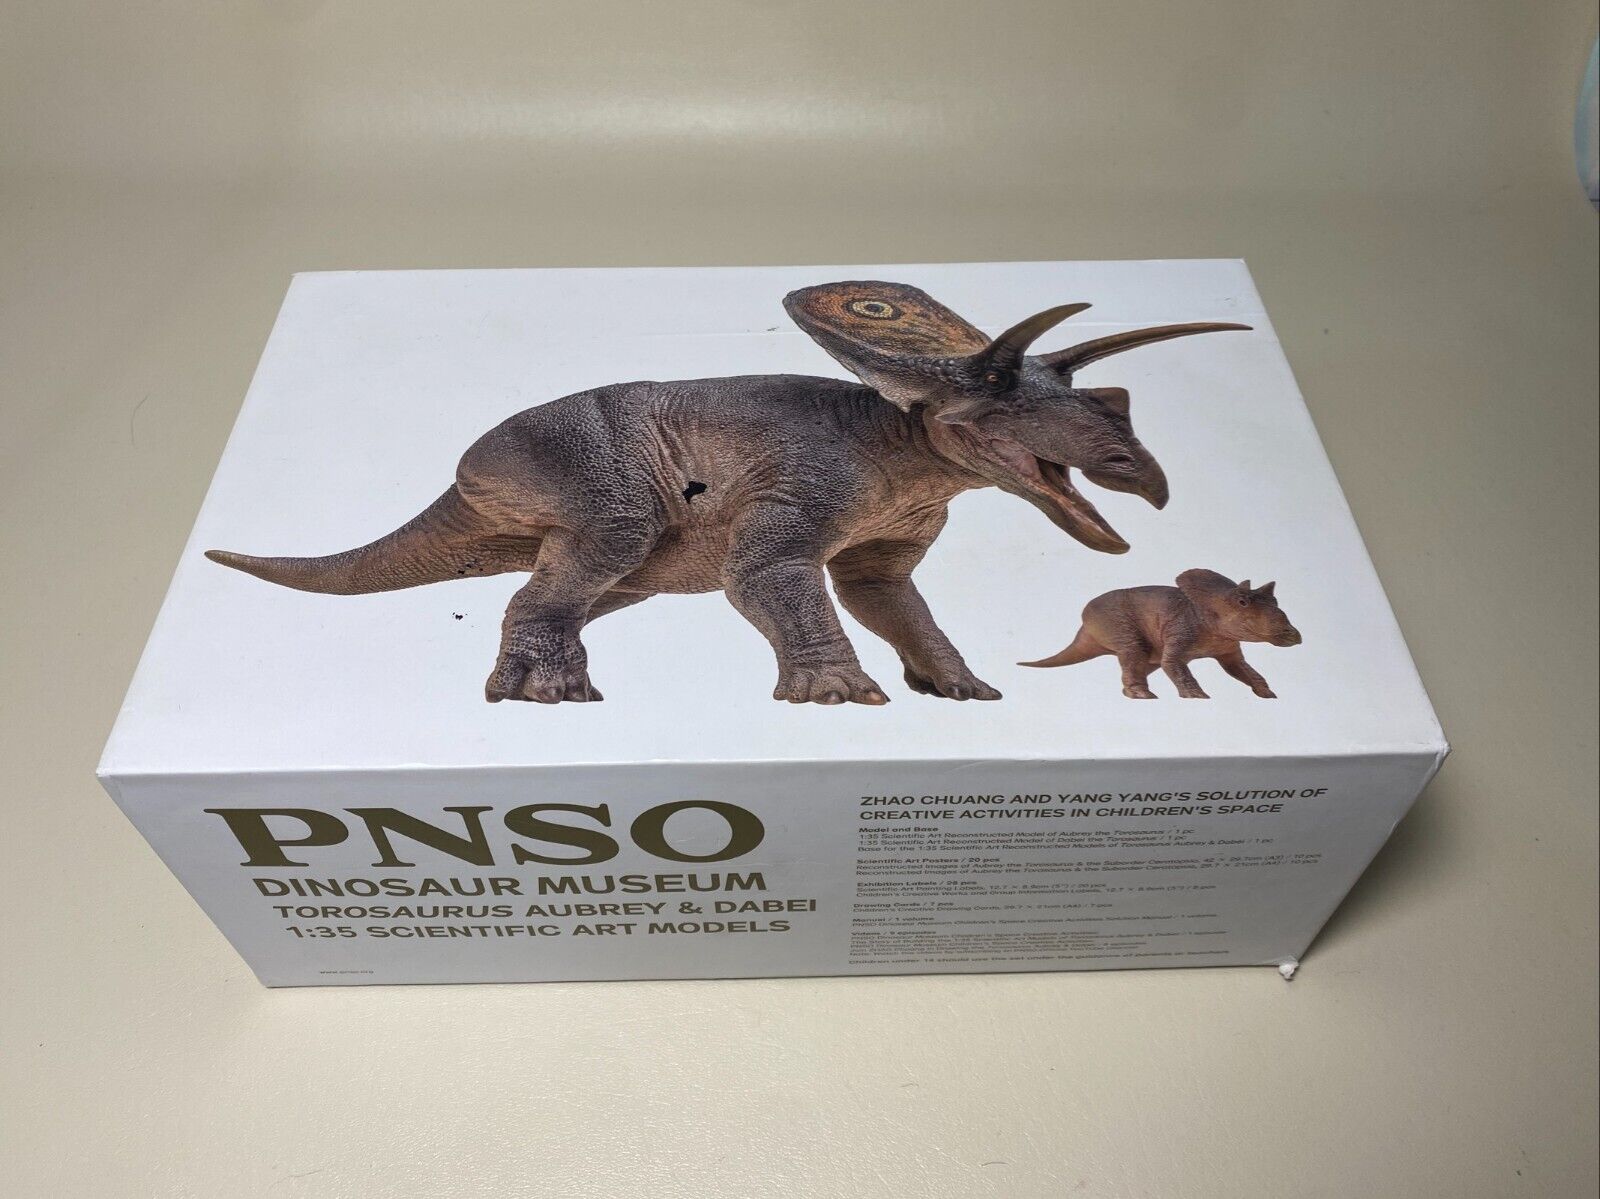 NIB PNSO Dinosaur Museum Torosaurus Aubrey & Dabei 1:35 Scientific Art Models